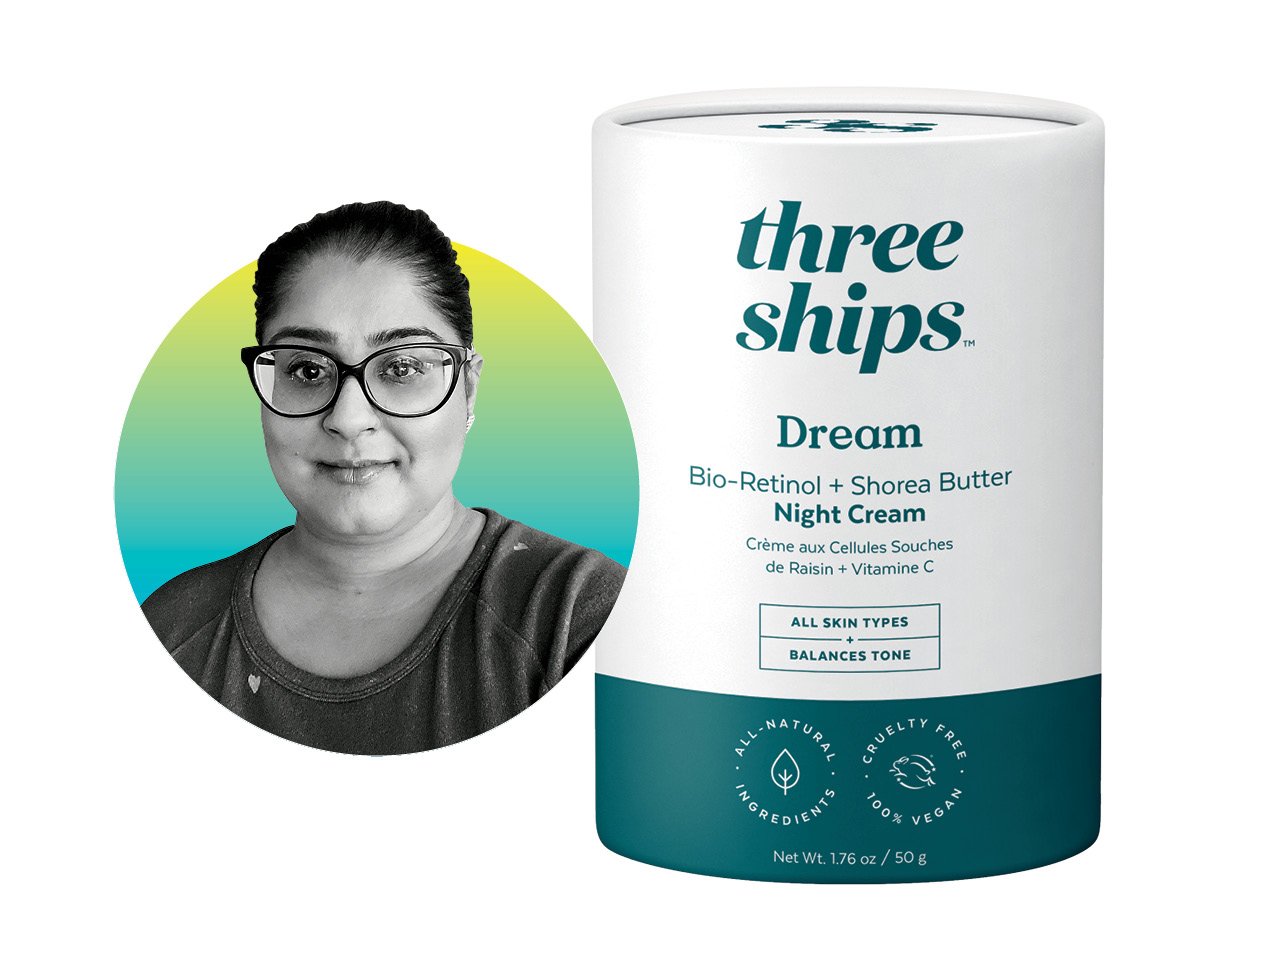 A Chatelaine reader reviews Three Ships Freem Bio-Retinol and Shorea Butter Night Cream.